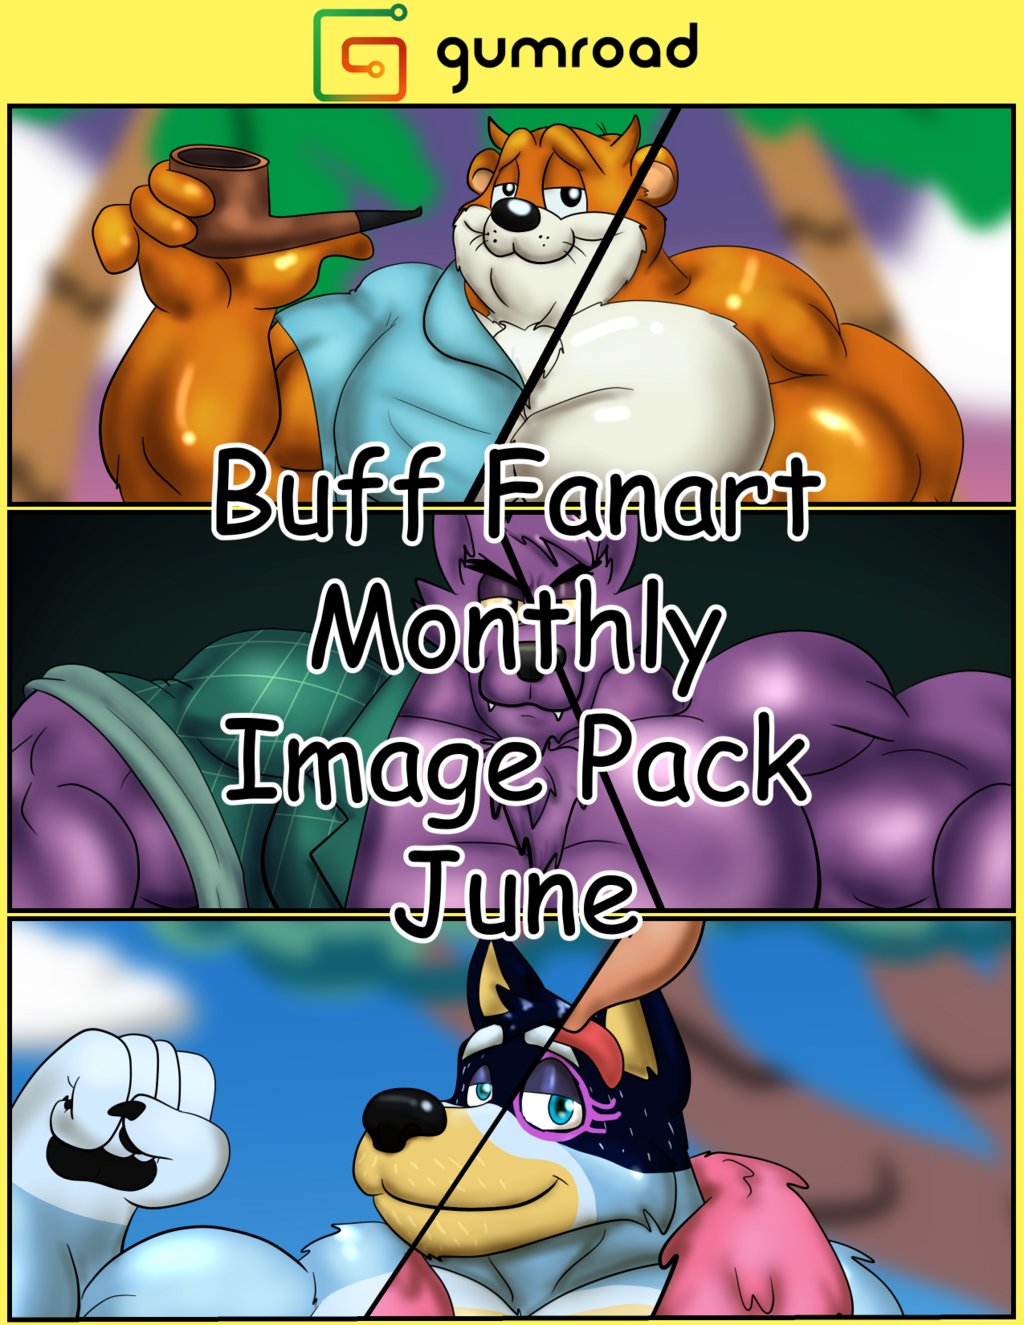 Buff Fanart Monthly Image Pack: June